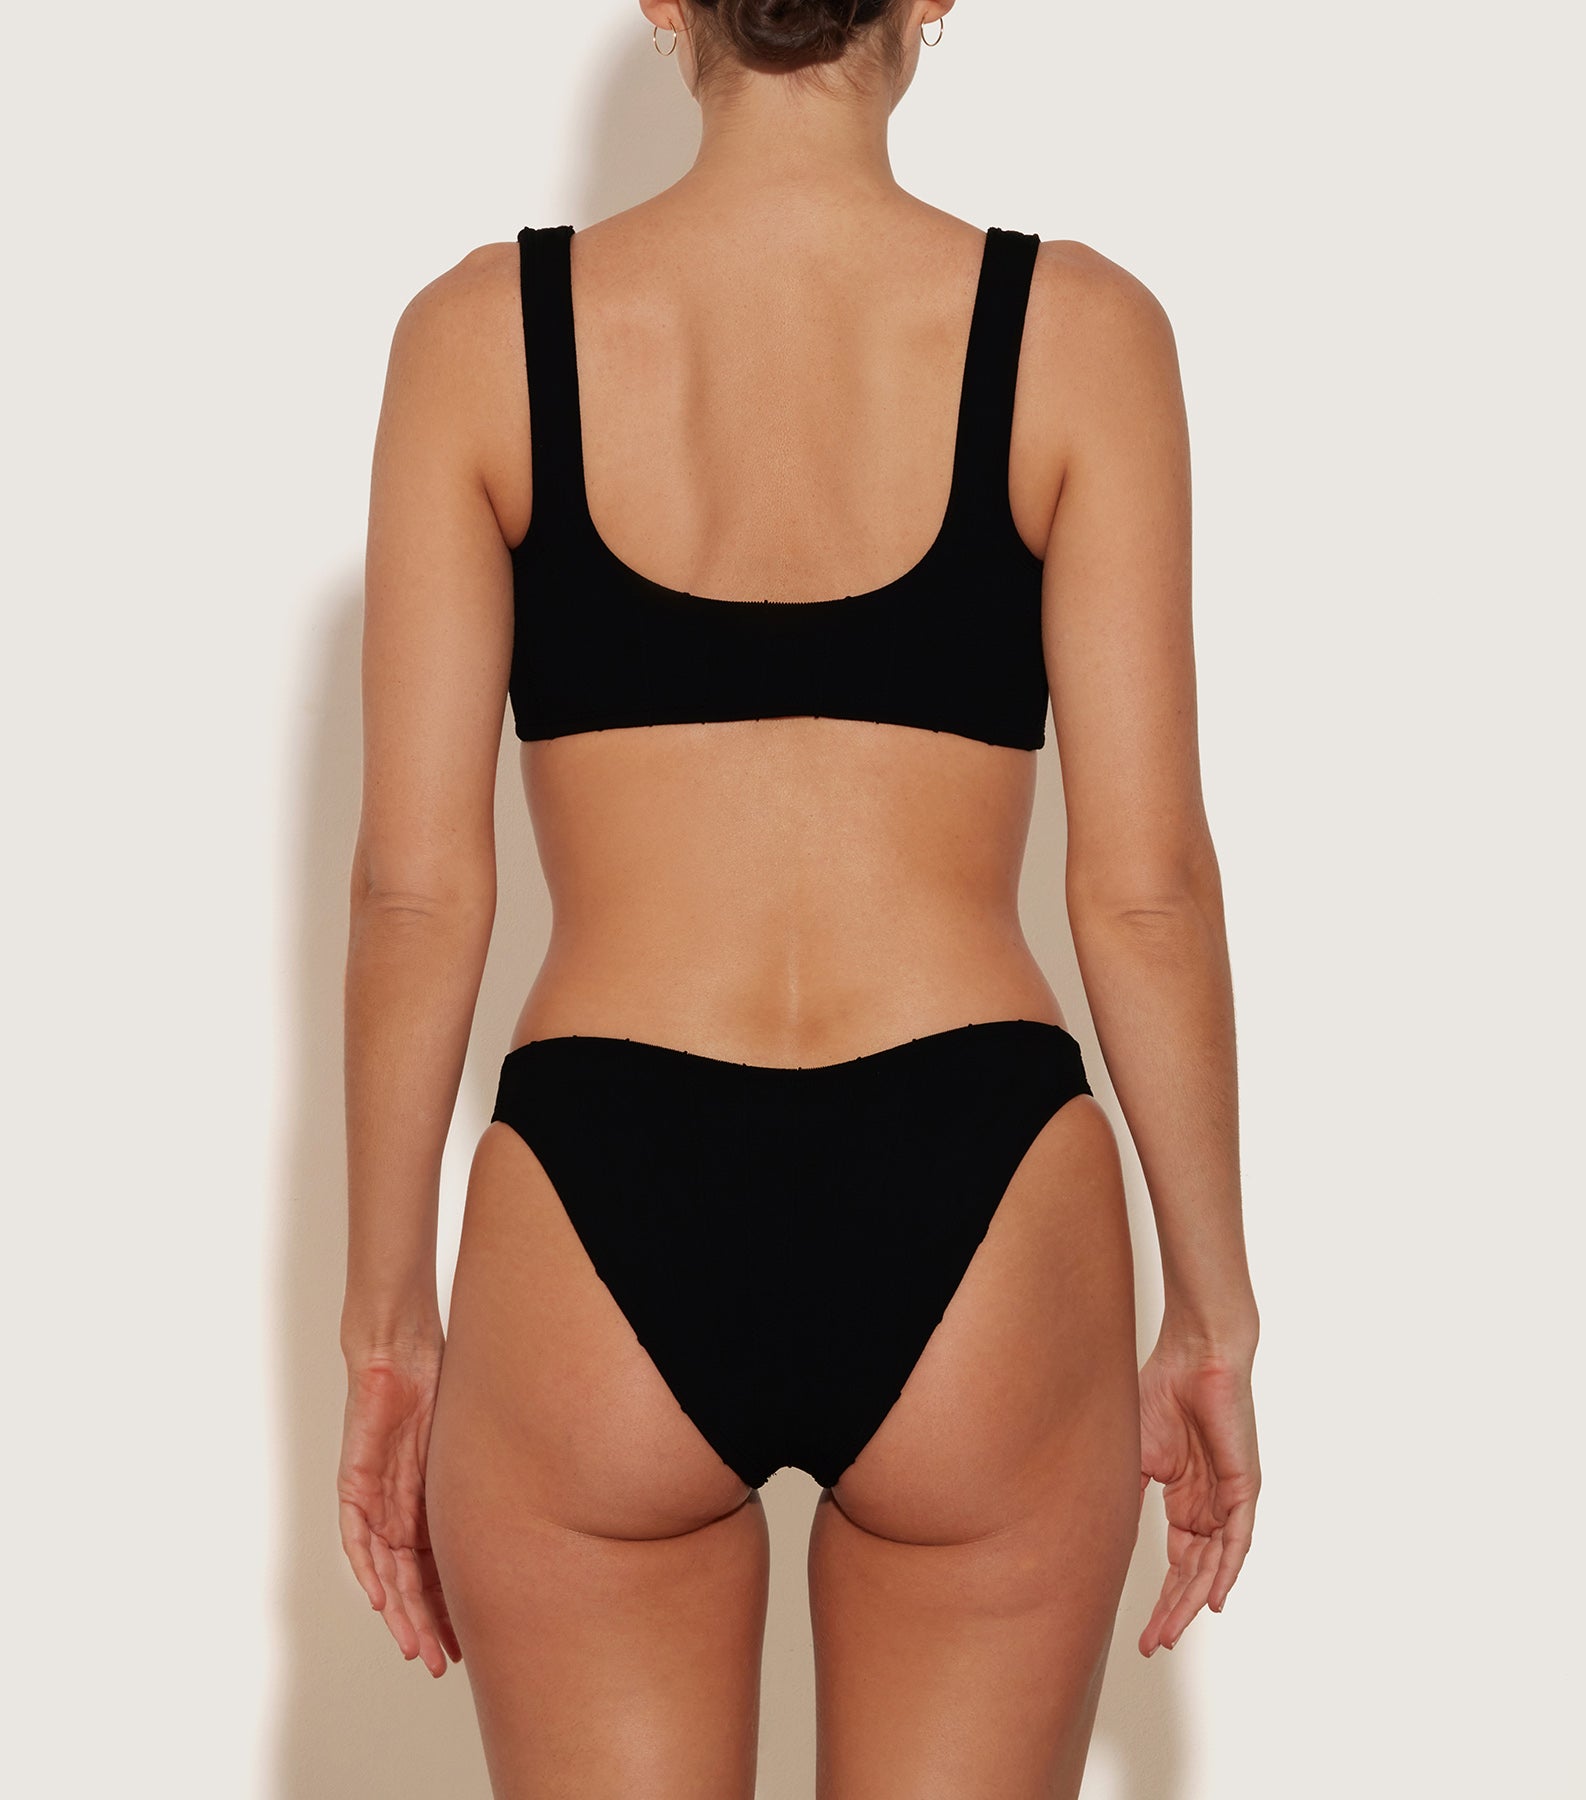 Xandra Nile Bikini - Black